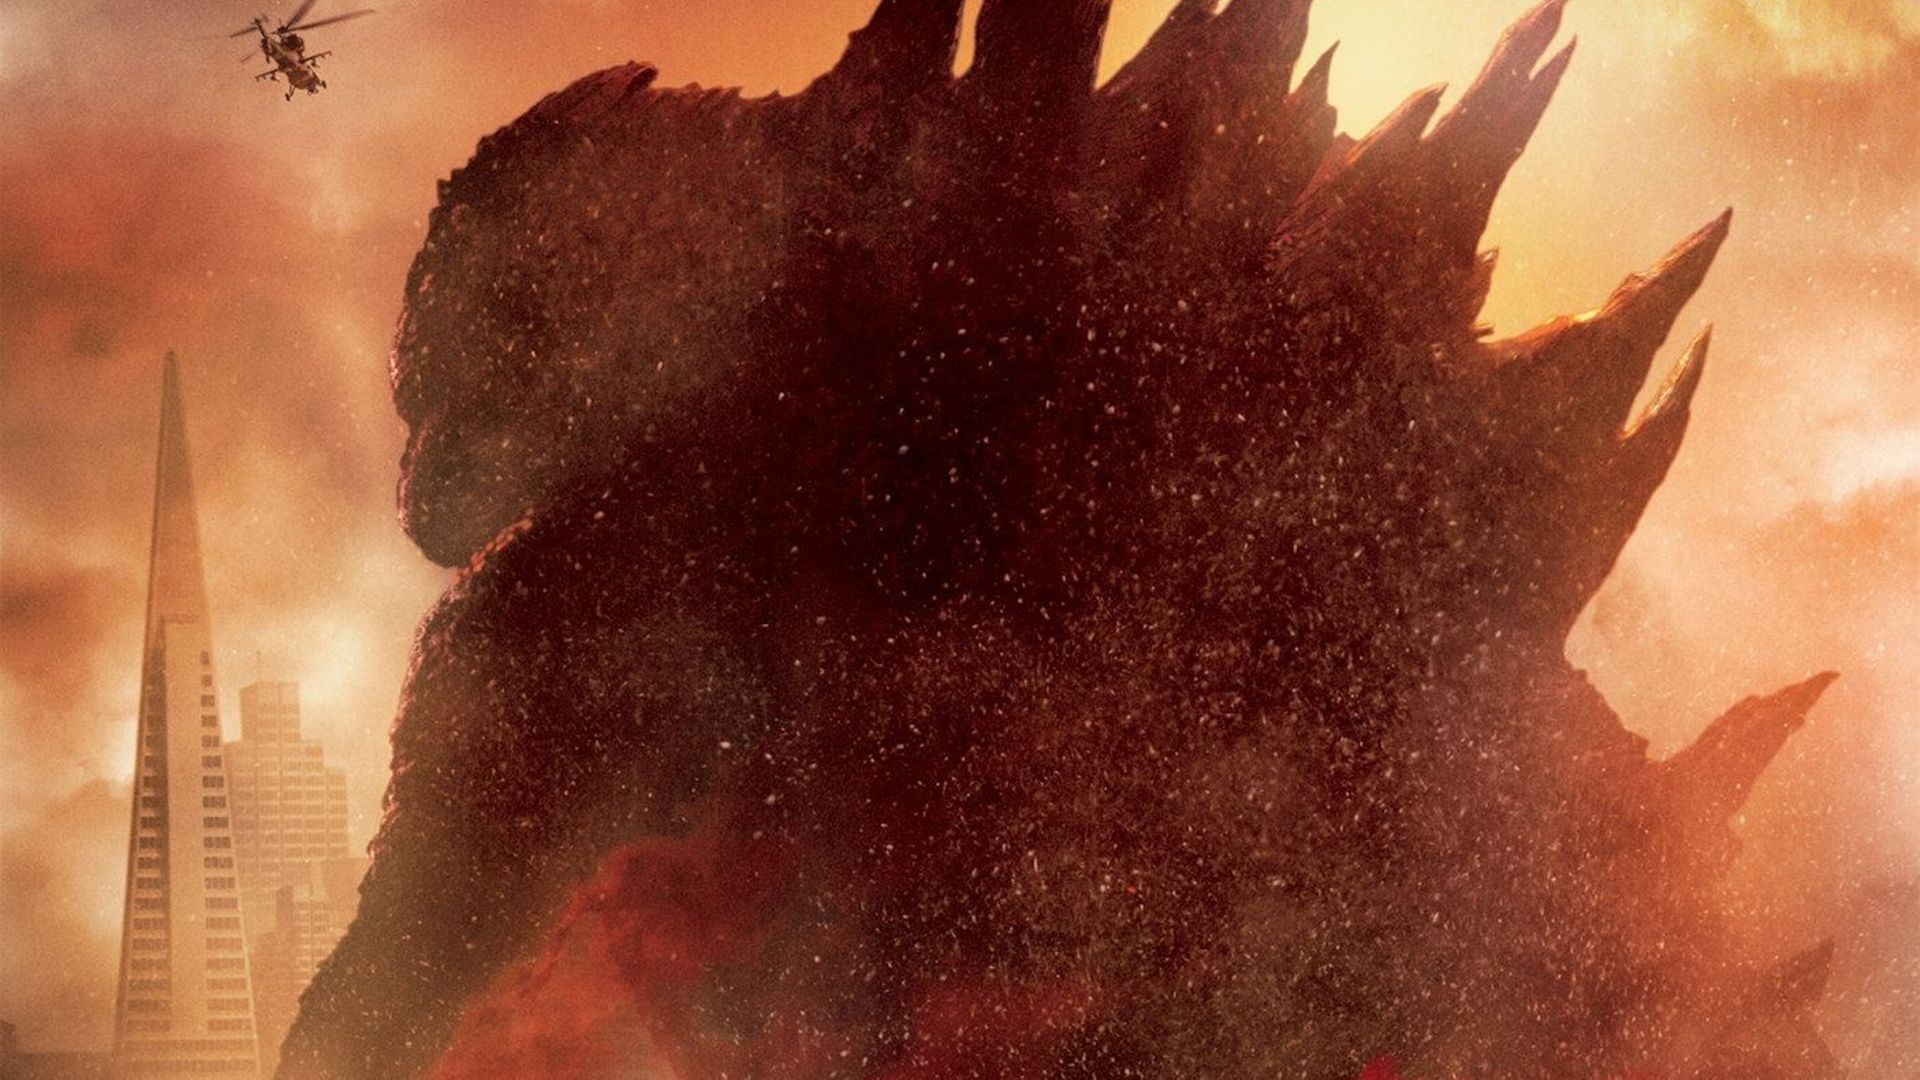 "Godzilla 2" est attendu en 2018